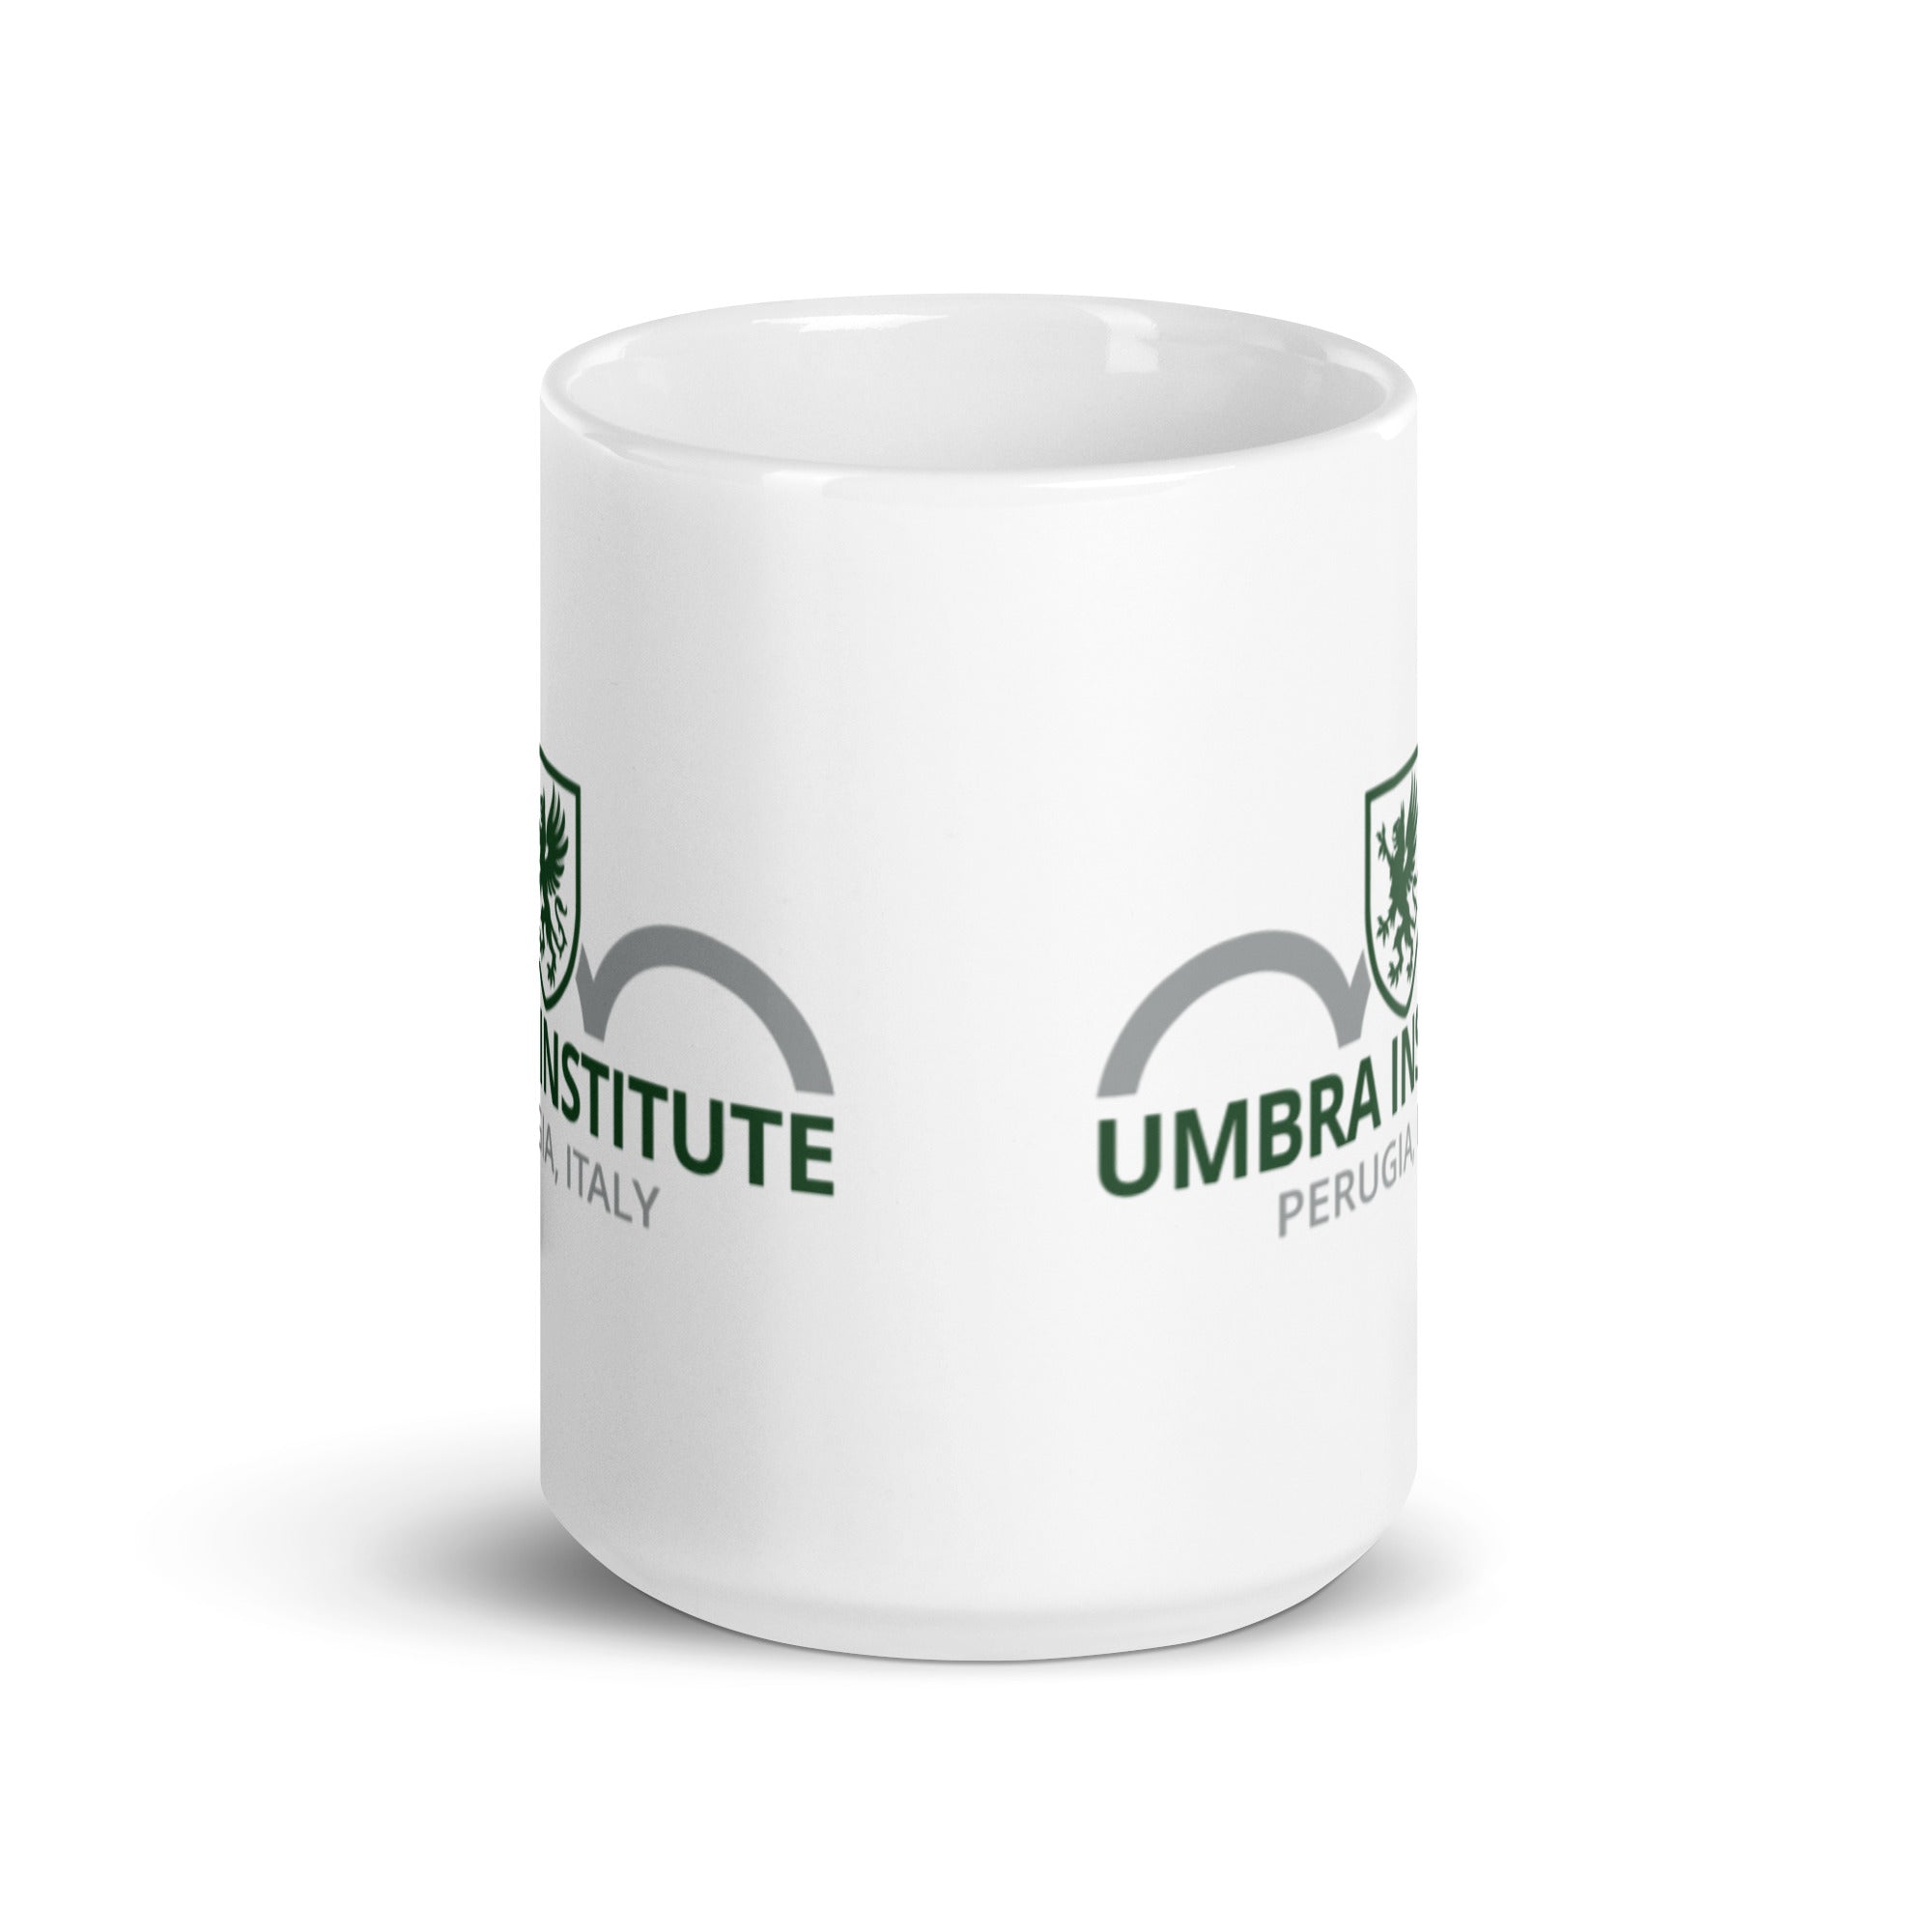 UI White glossy mug